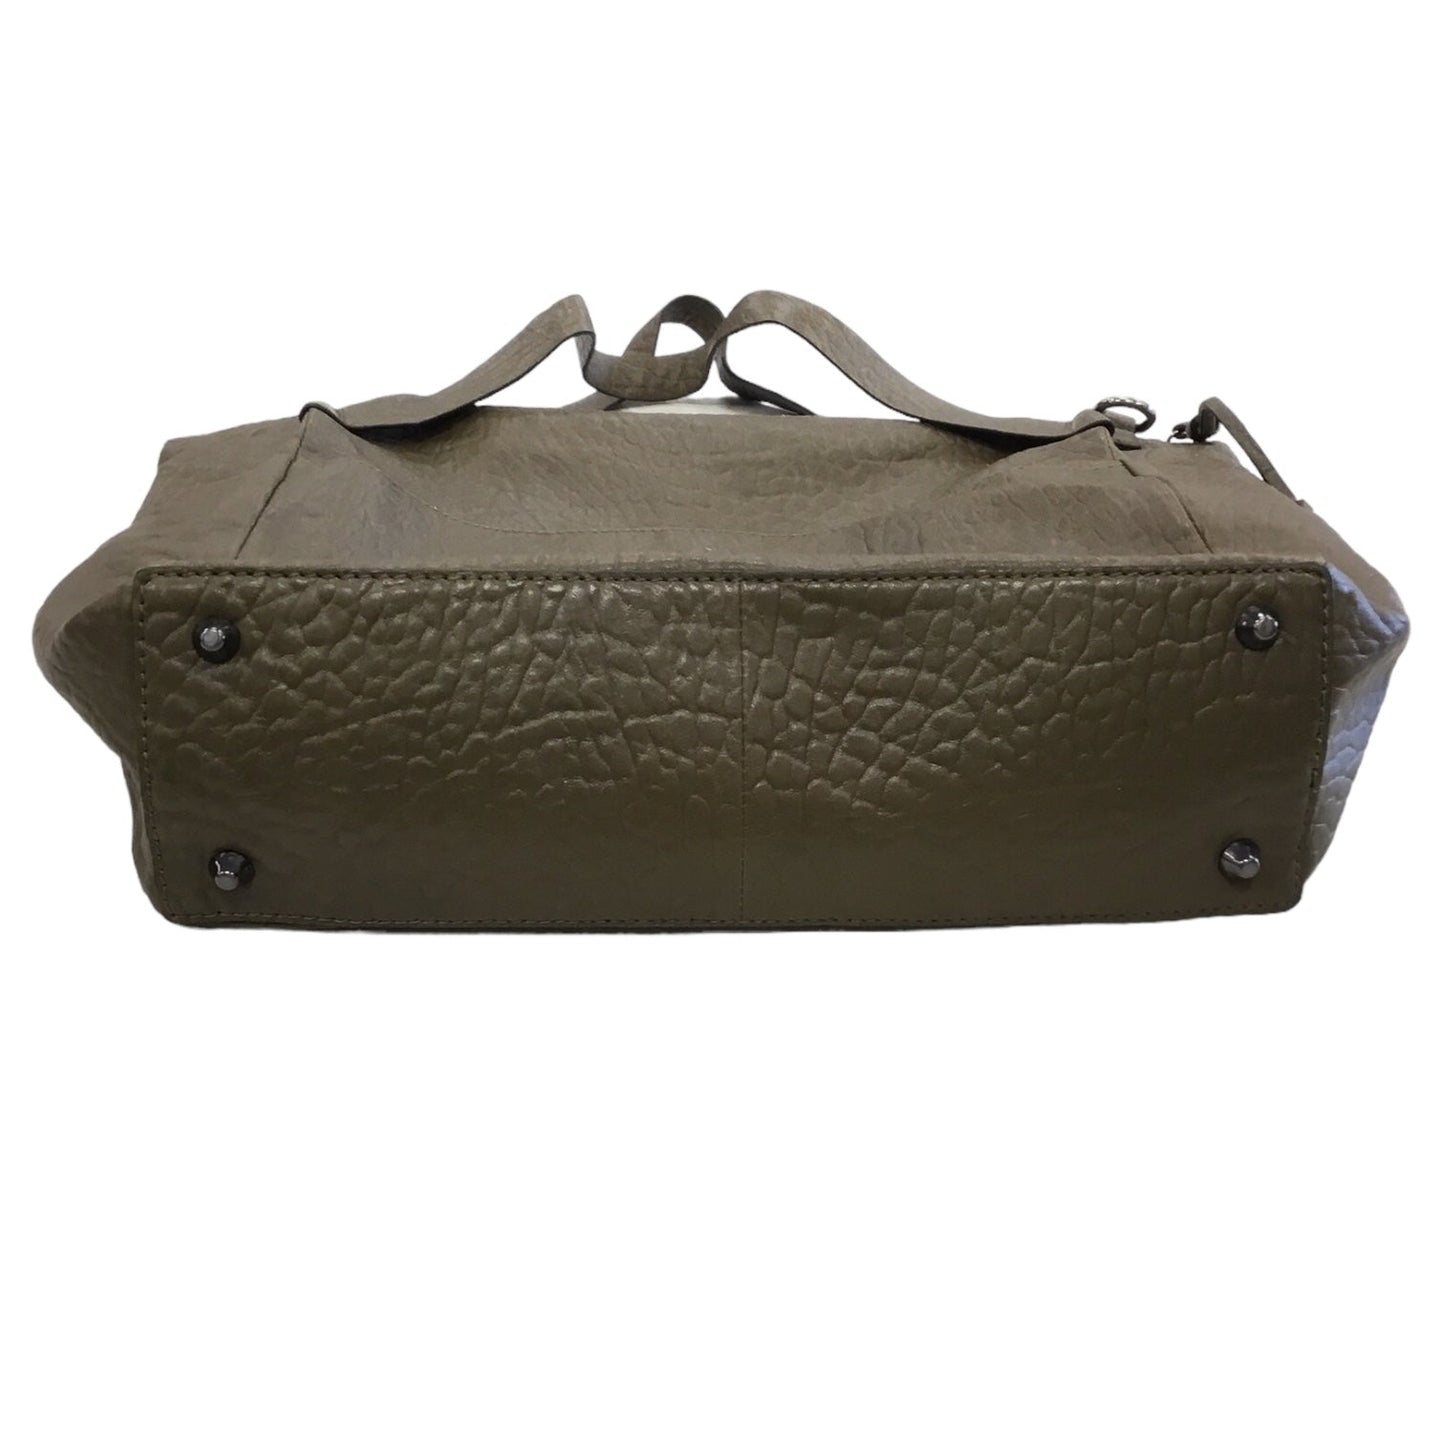 Handbag Vince Camuto, Size Medium